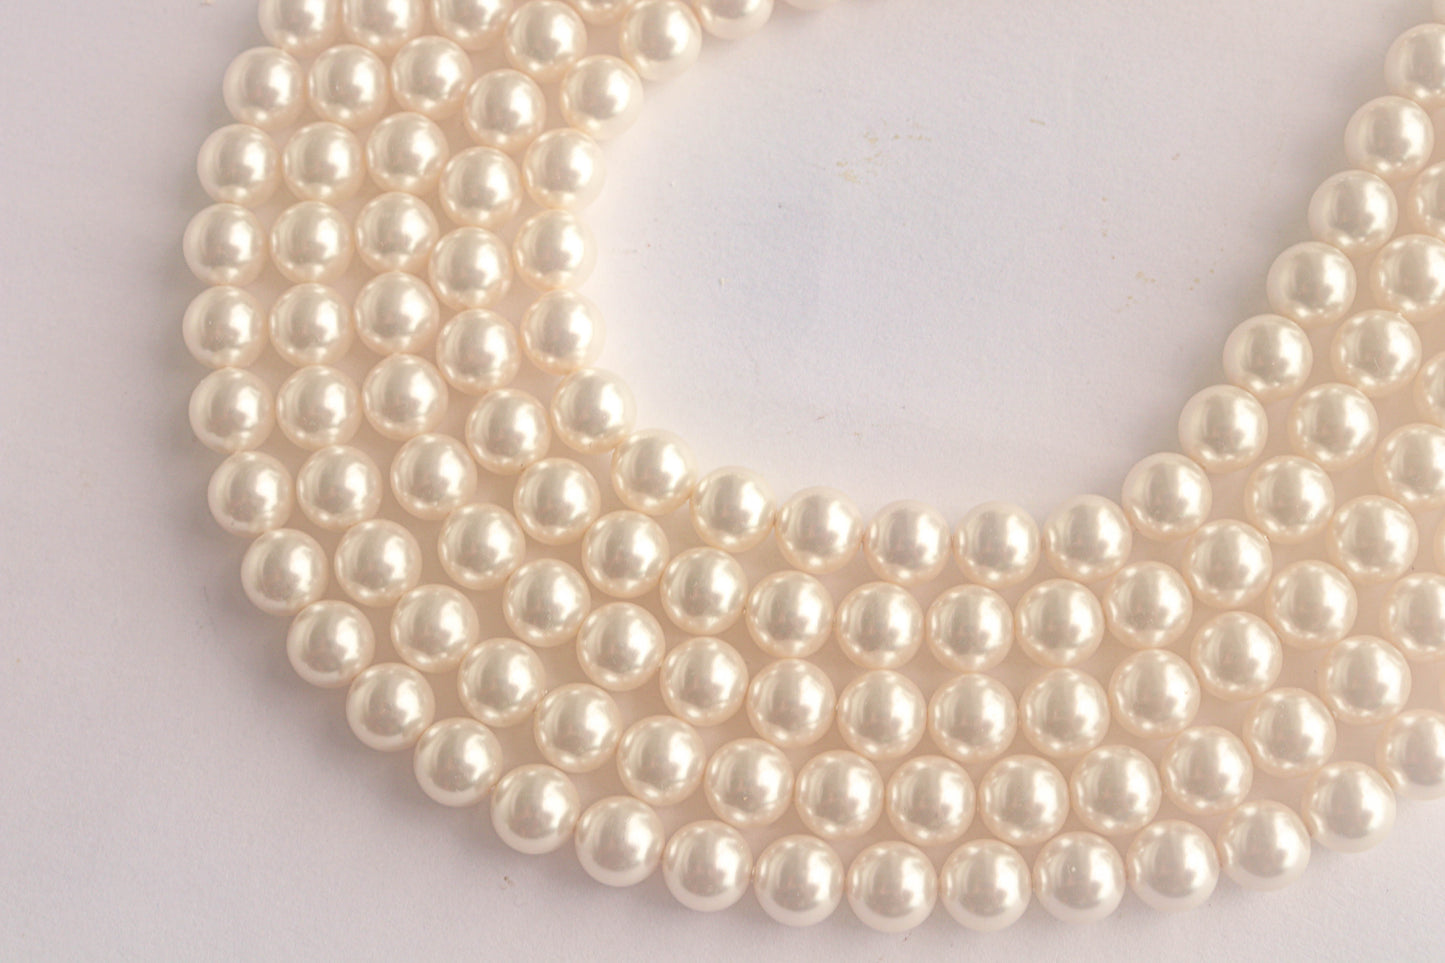 5mm Crystal White (001 650) Genuine Swarovski 5810 Pearls Round Beads jewelry making Beadsforyourjewelry